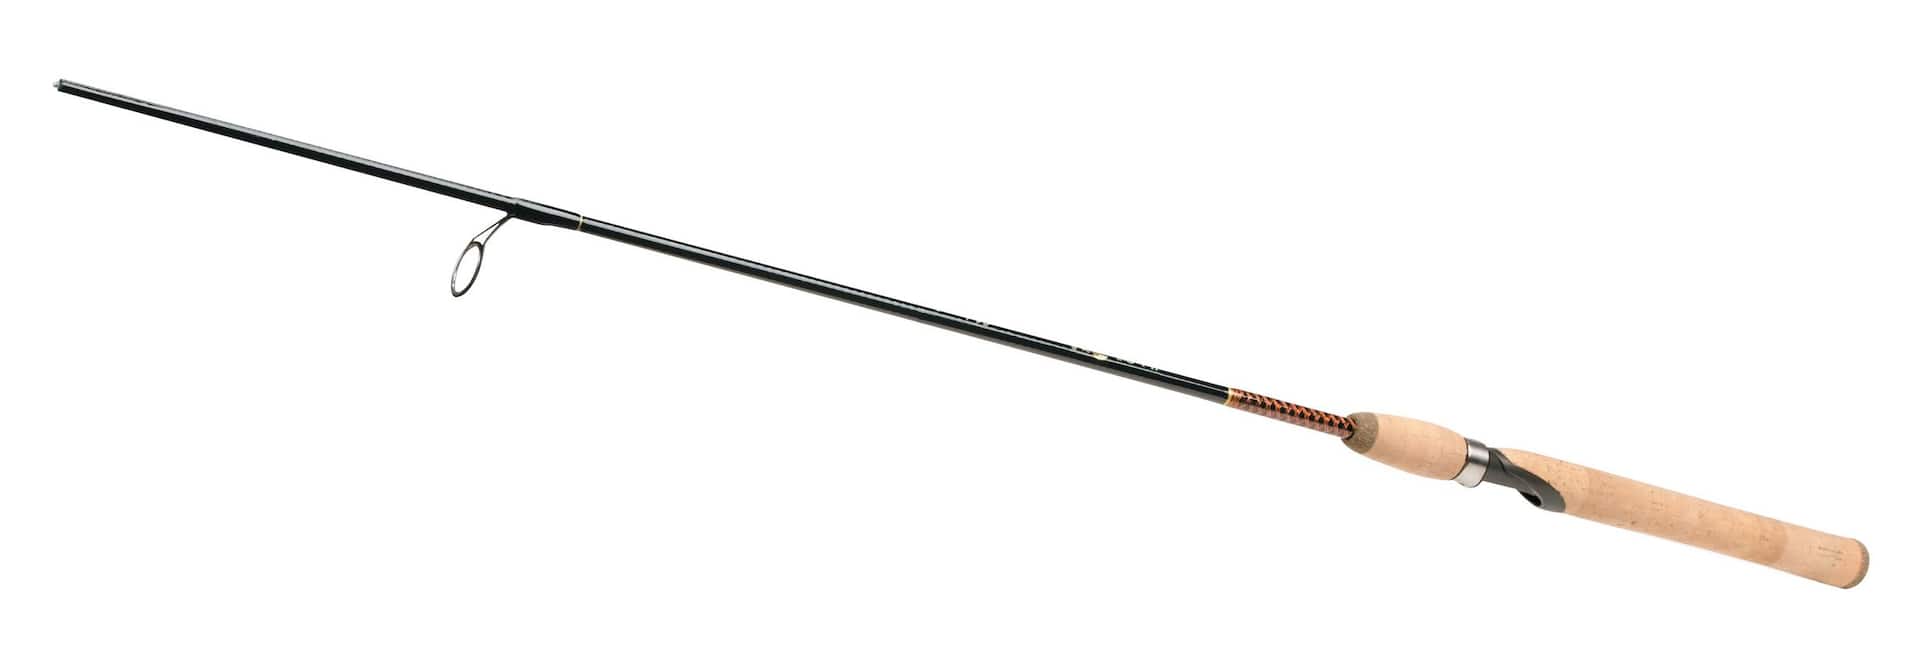 Ugly Stik Lite Spinning Fishing Rod, 6 ft 6 in